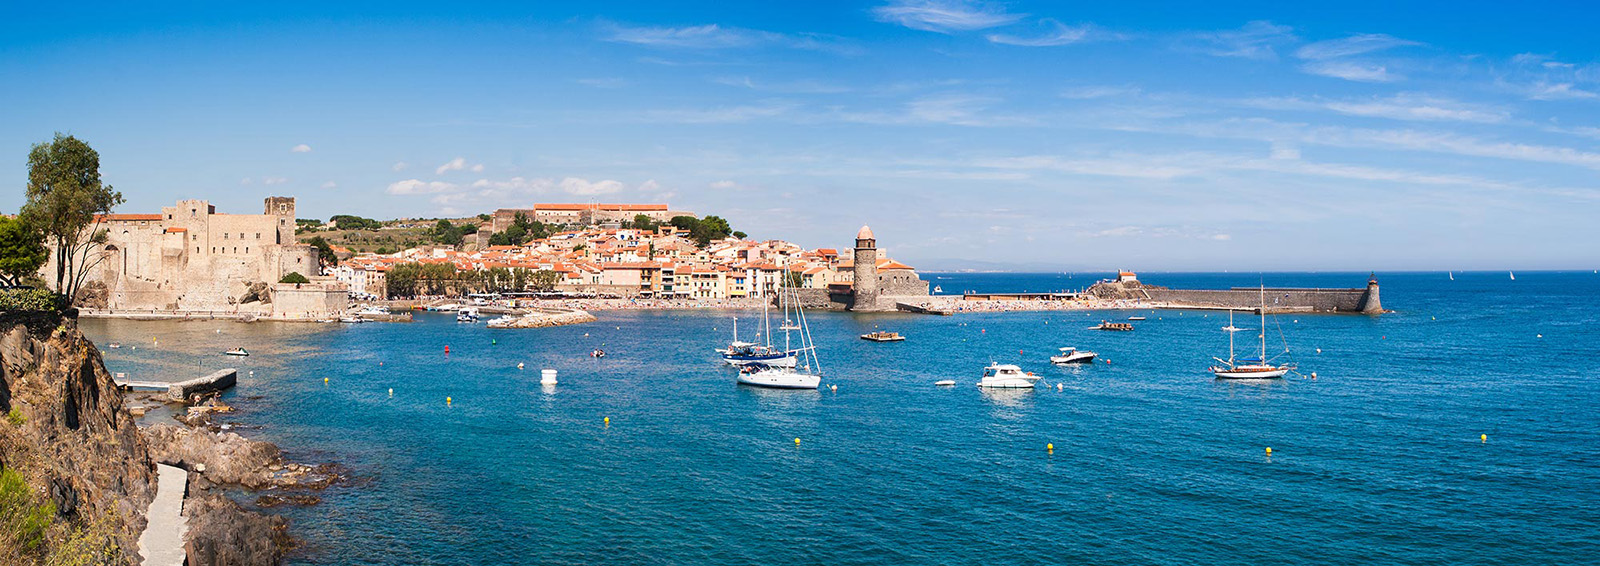 Collioure-Port